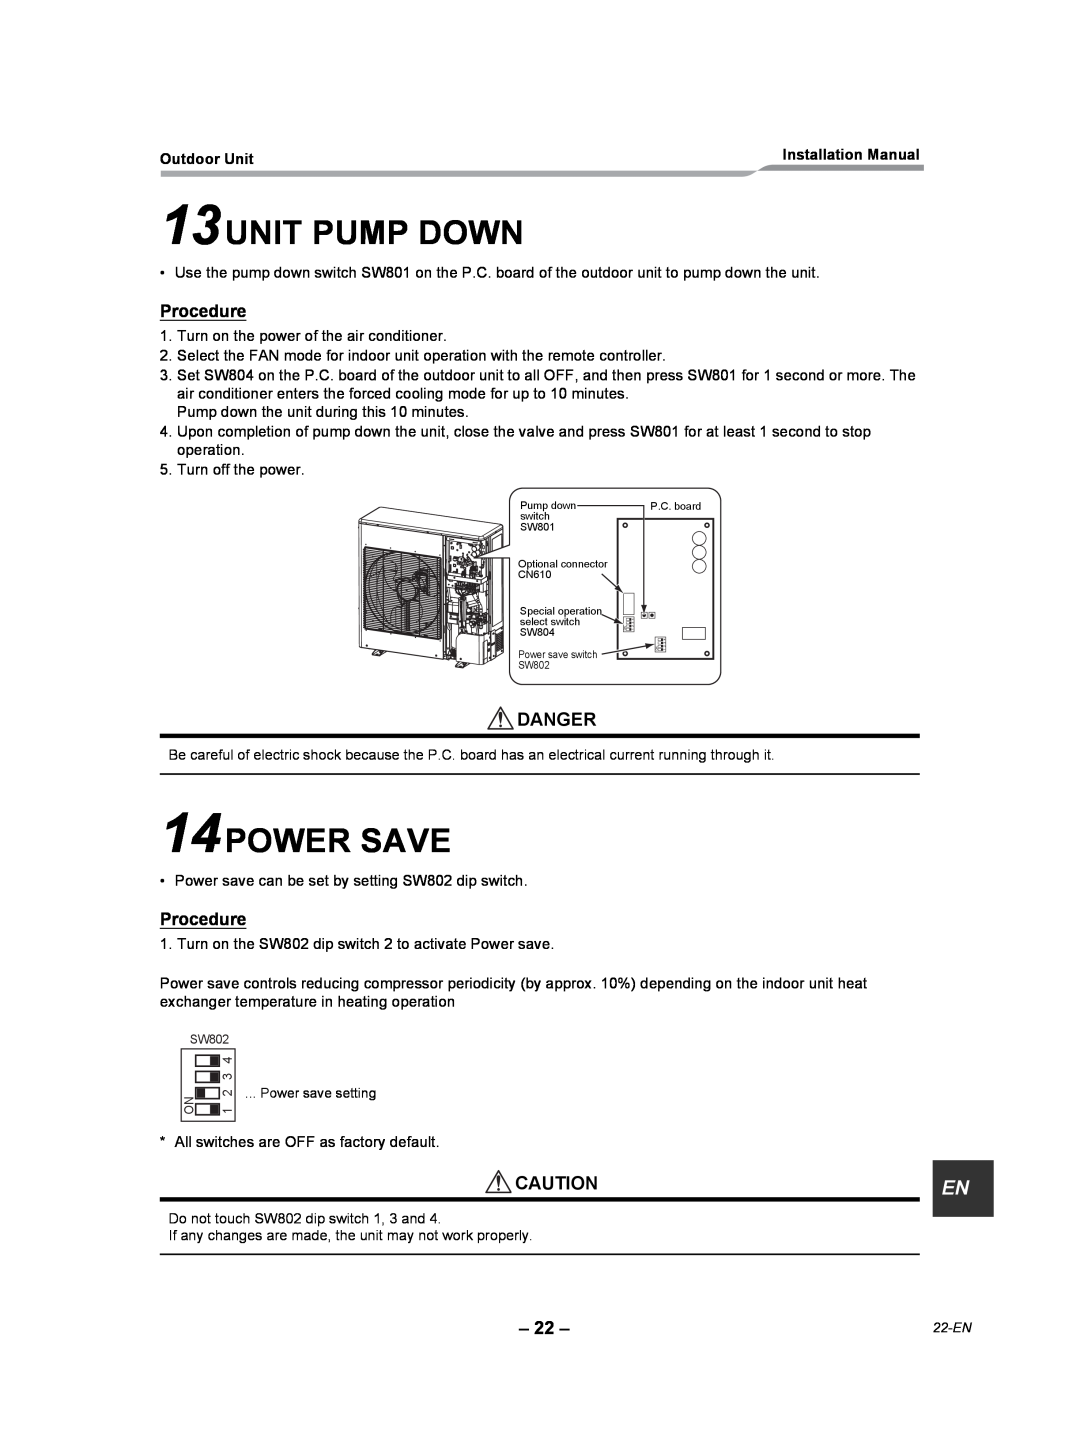 Toshiba RAV-SP240AT2-UL installation manual 13UNIT PUMP DOWN, 14POWER SAVE, Procedure 